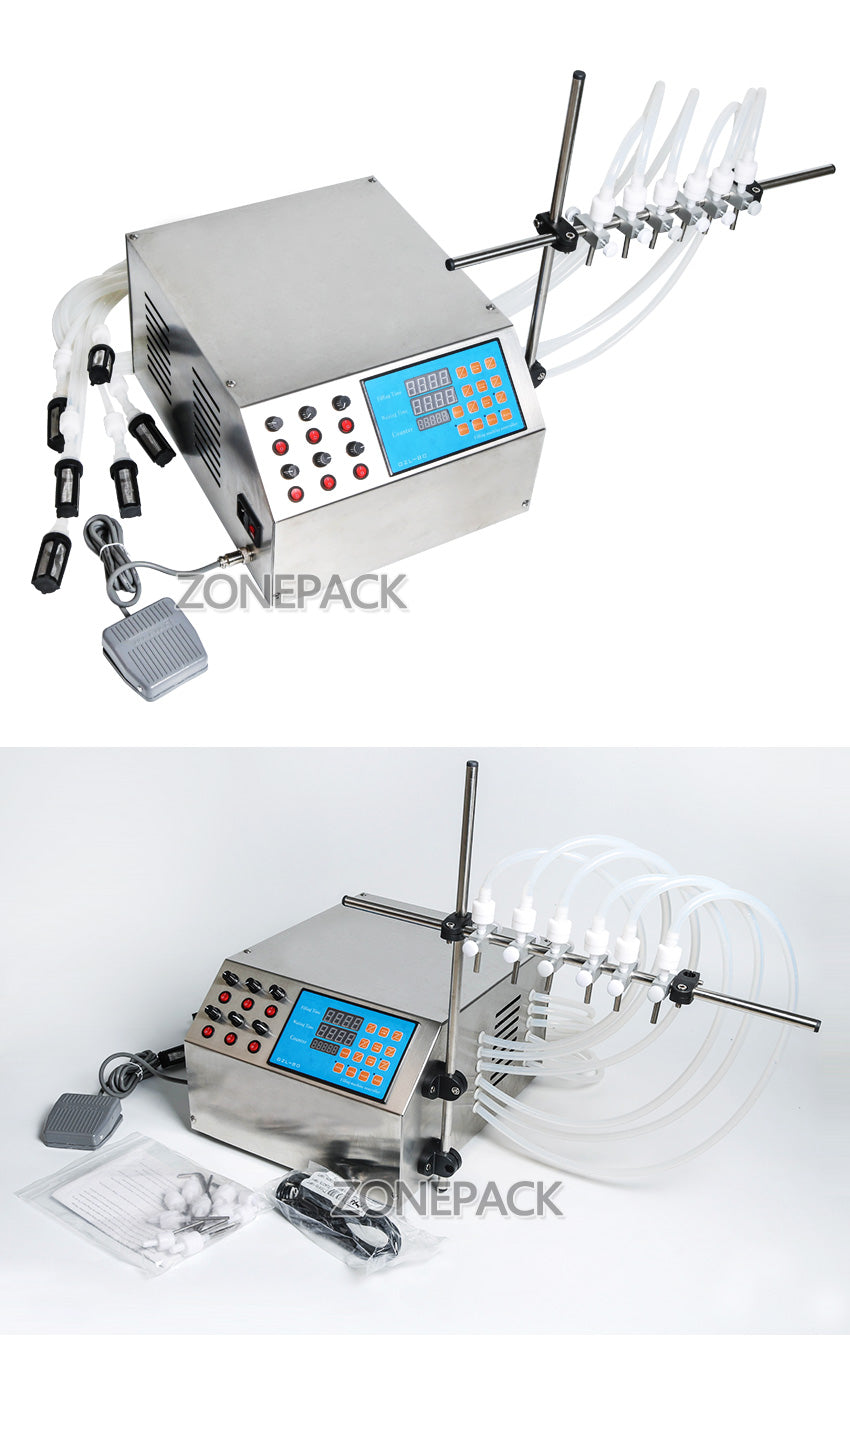 ZONEPACK Electric Digital Control Pump Liquid Filling Machine 3-4000ml for Liquid Perfume Water Juice Essential Oil with 6 Heads